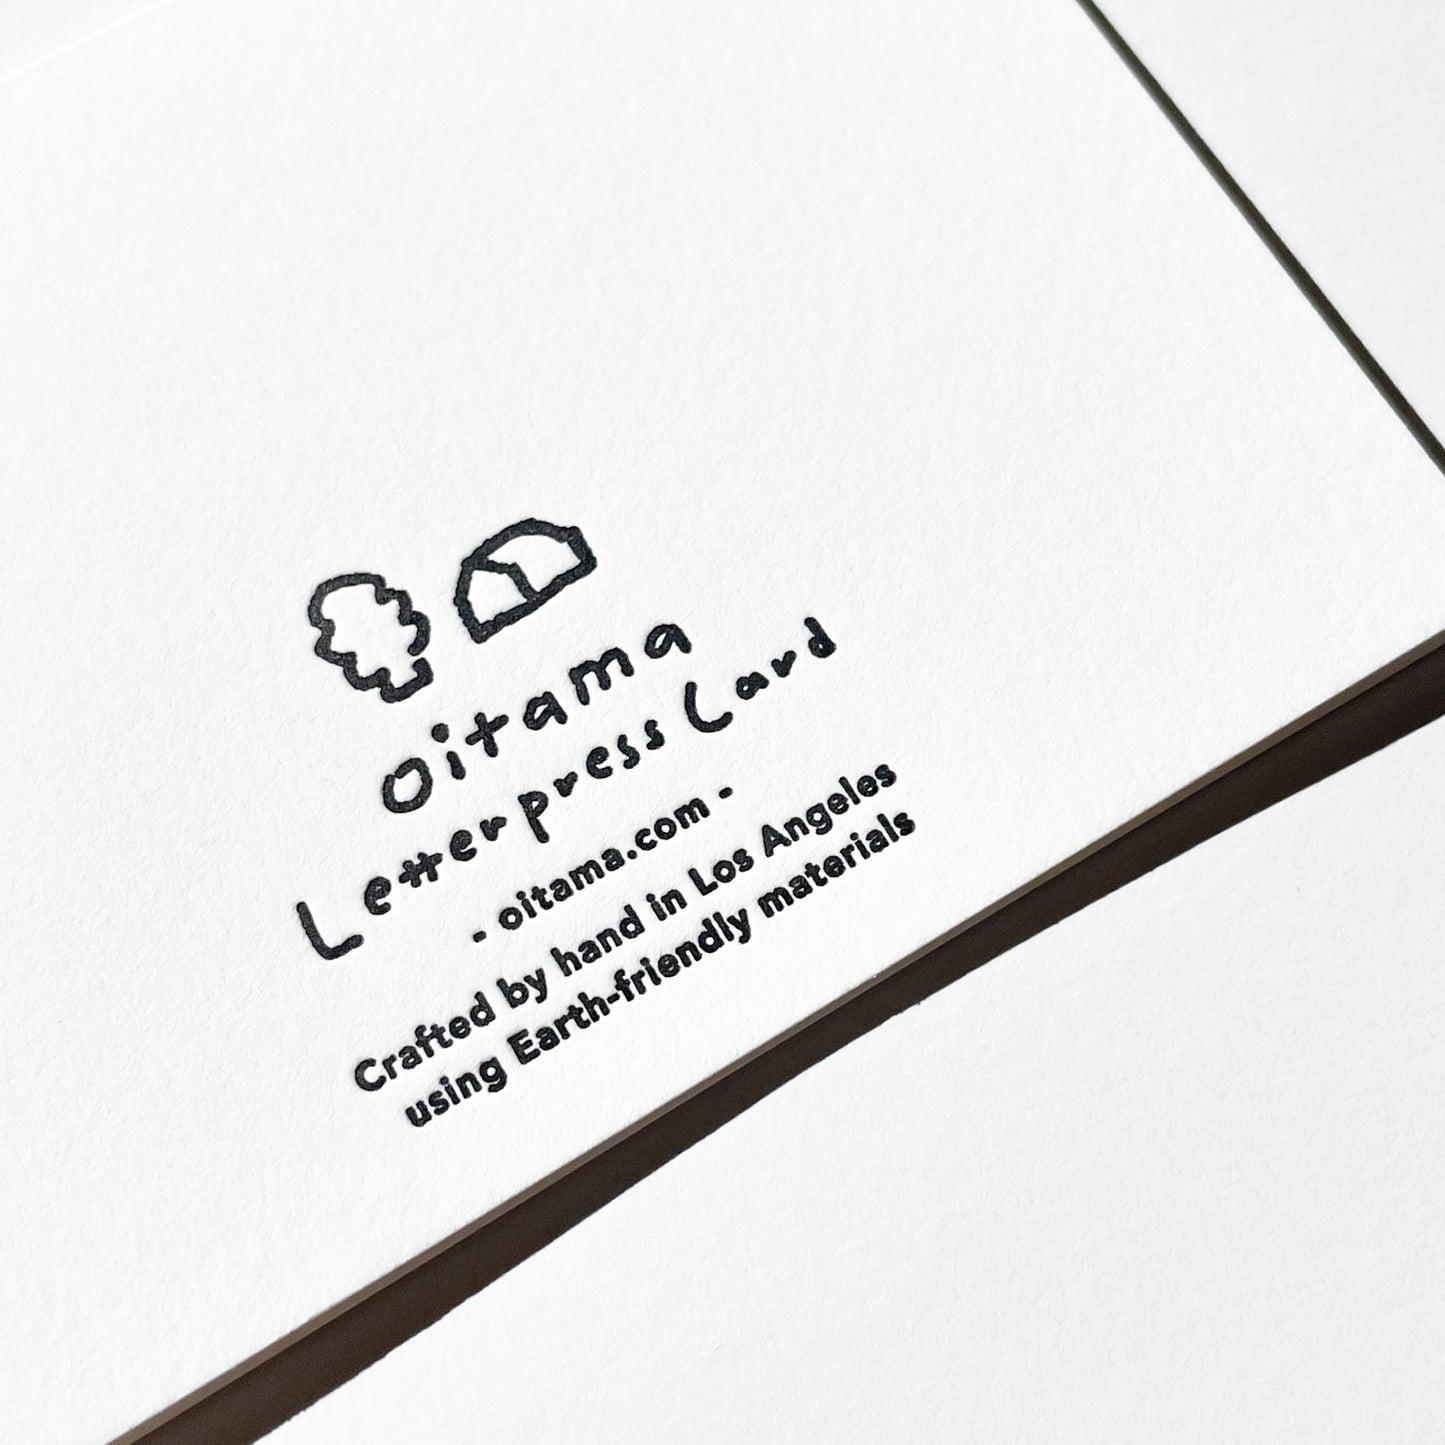 OITAMA Letterpress Card/ Rabbit and Moon